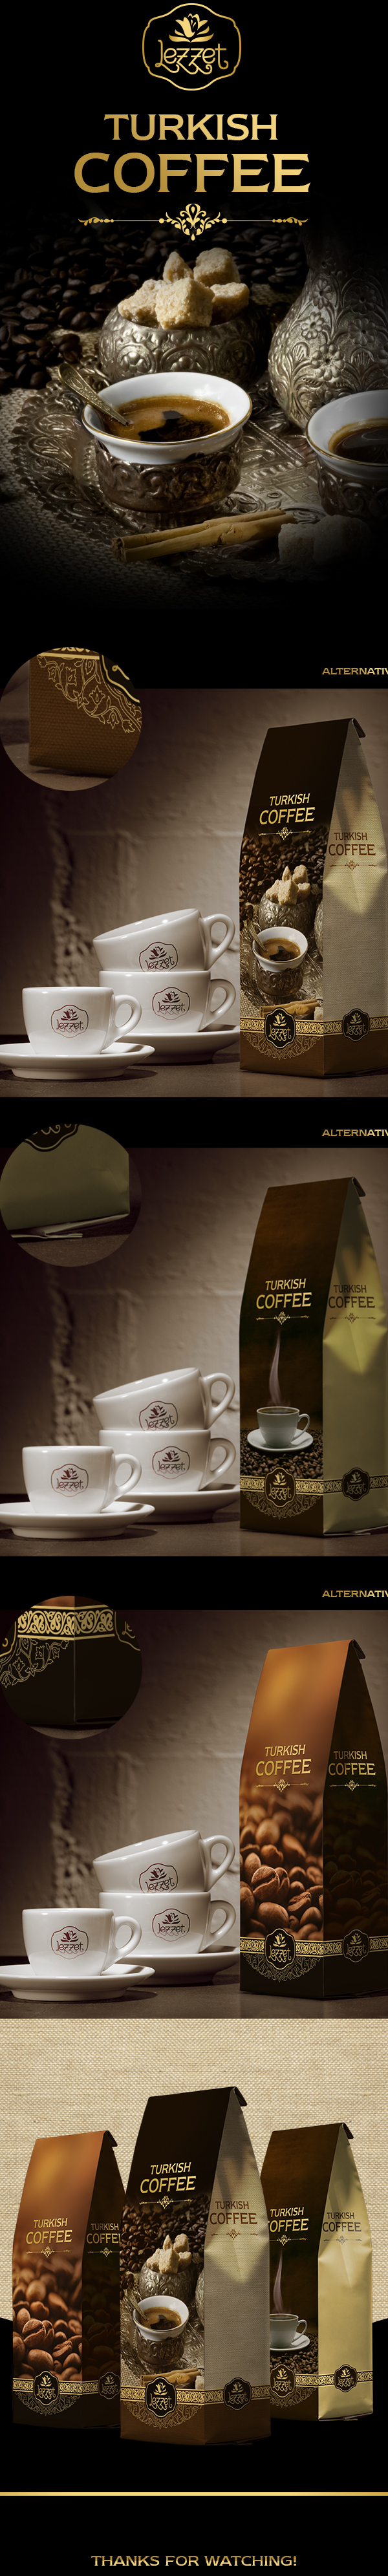 Coffee package turkishcoffee   arabic ambalaj lezzet reklam creative packing box